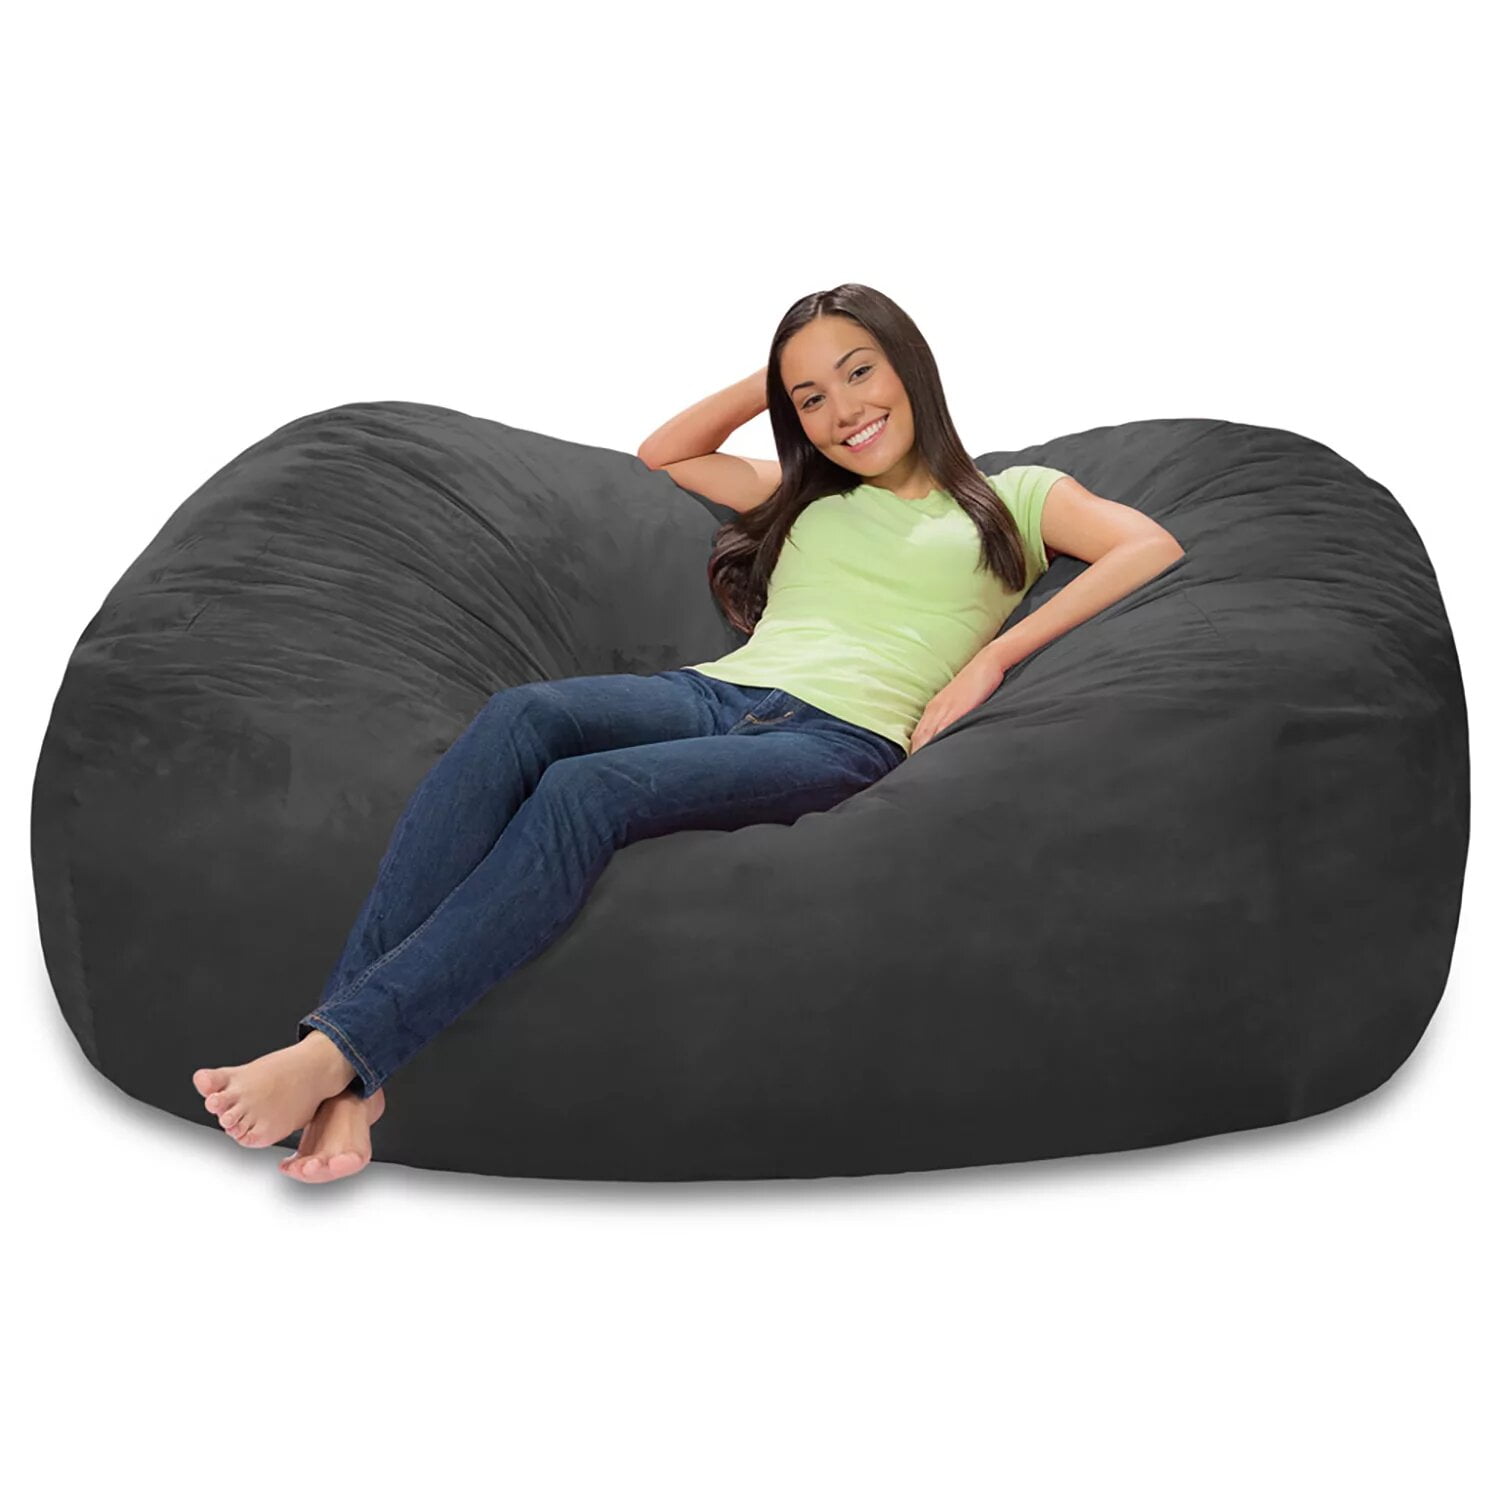 Comfy Sacks 6’ Memory Foam Bean Bag Lounger ( Grey ) - Walmart.com